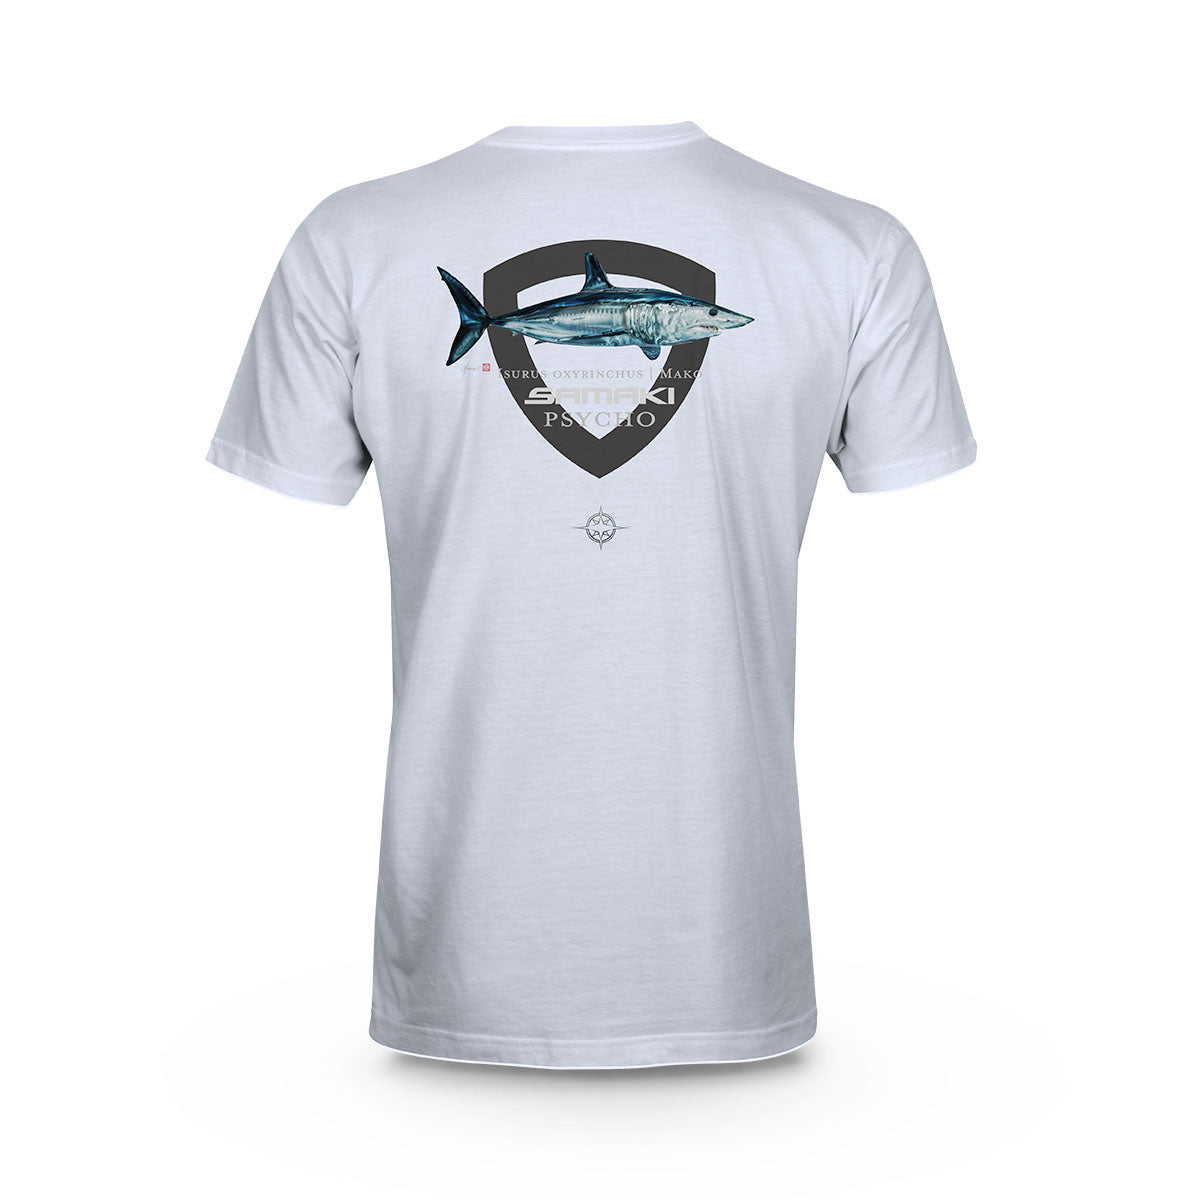 Mako Shark T-Shirt